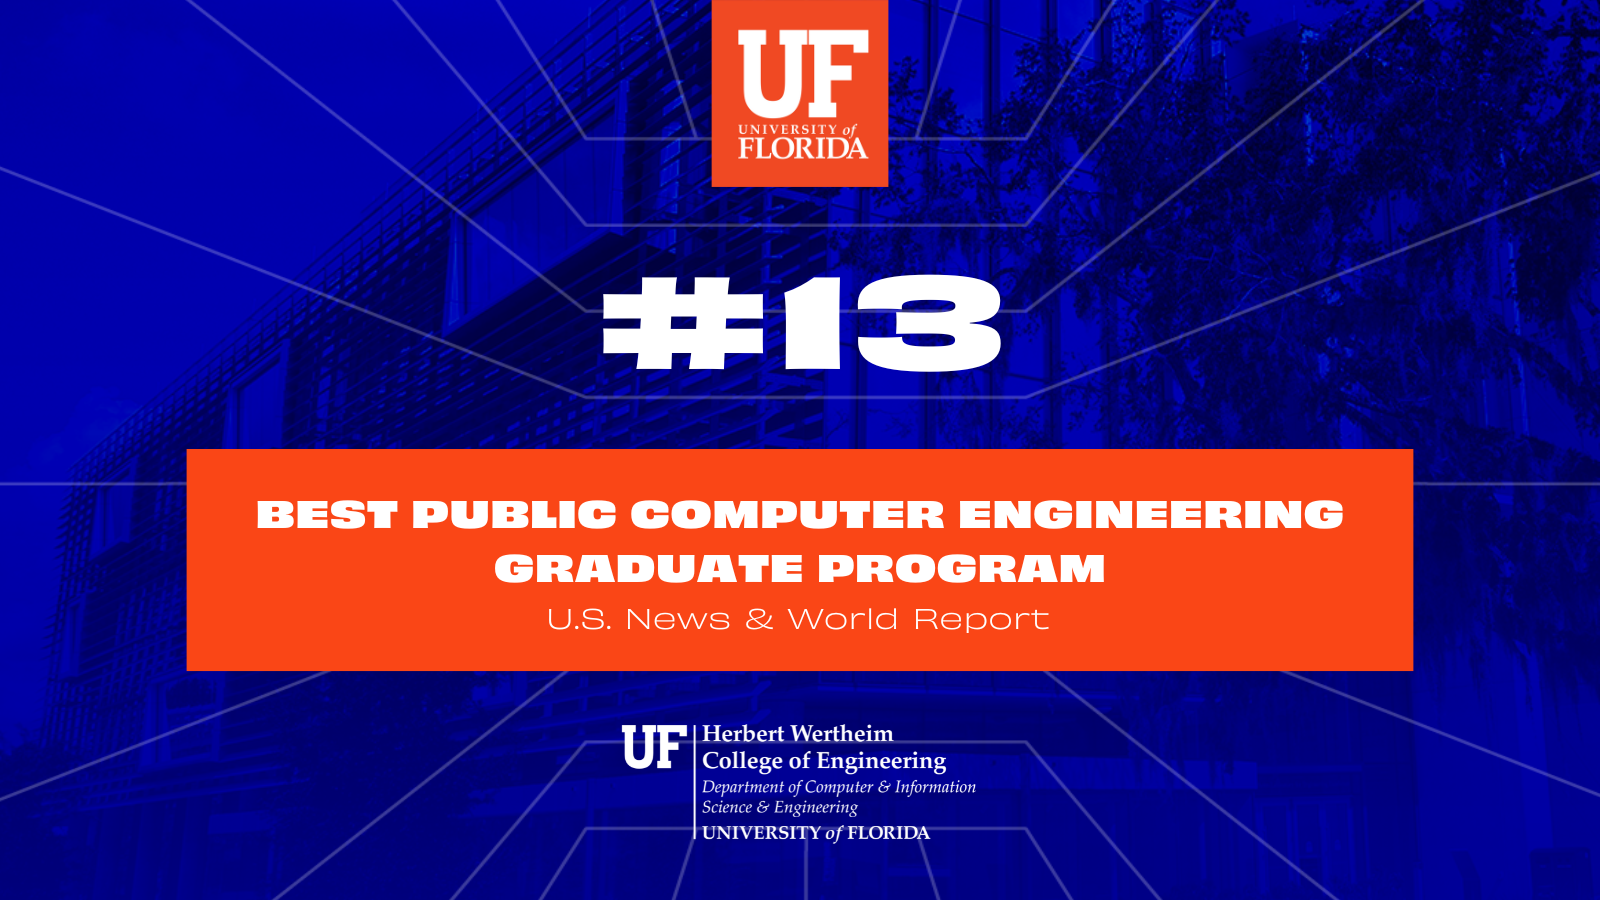 Computer Engineer Graduate Program Ranks No. 13